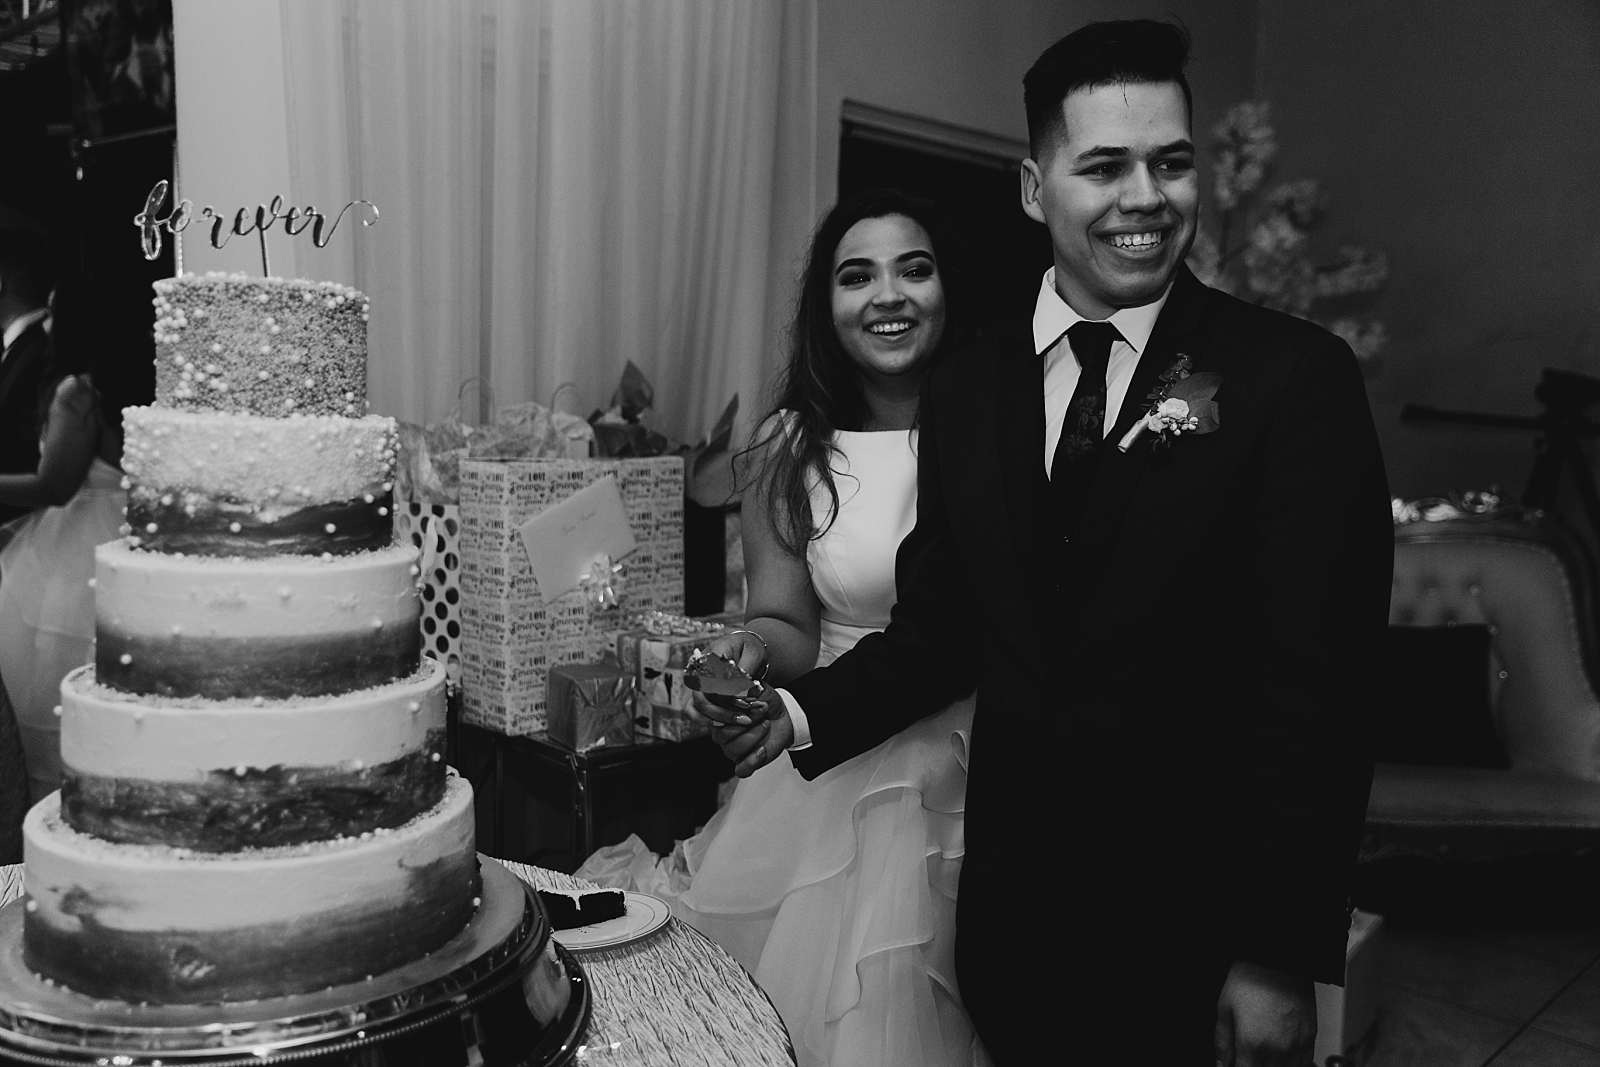 Cake cutting Salon Mexico Wedding Photos Tucson Arizona Photographer